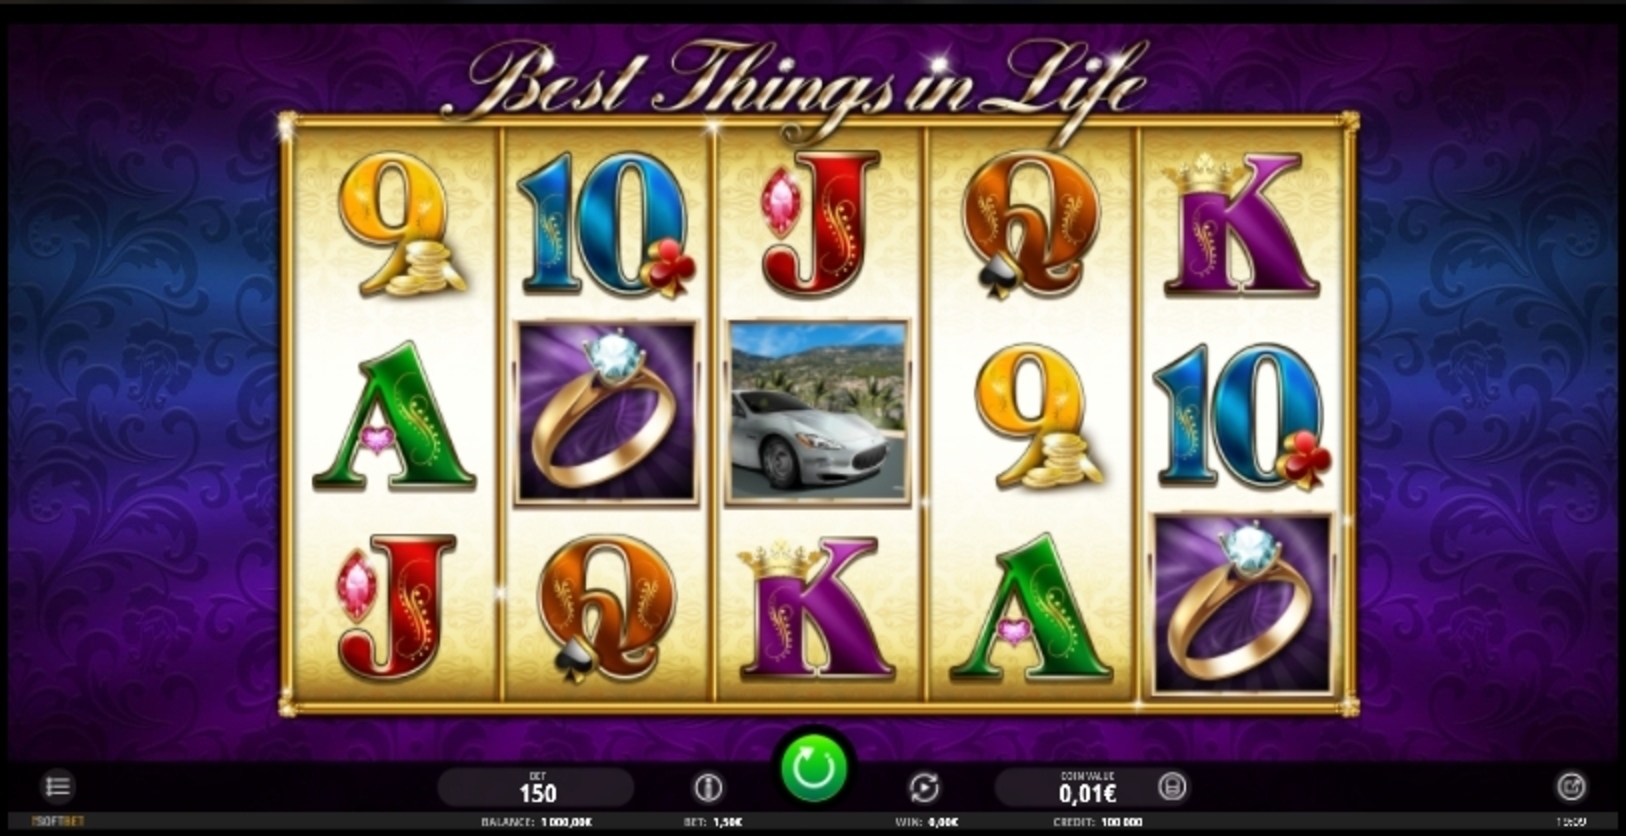 Reels in Best Things in Life Slot Game by iSoftBet